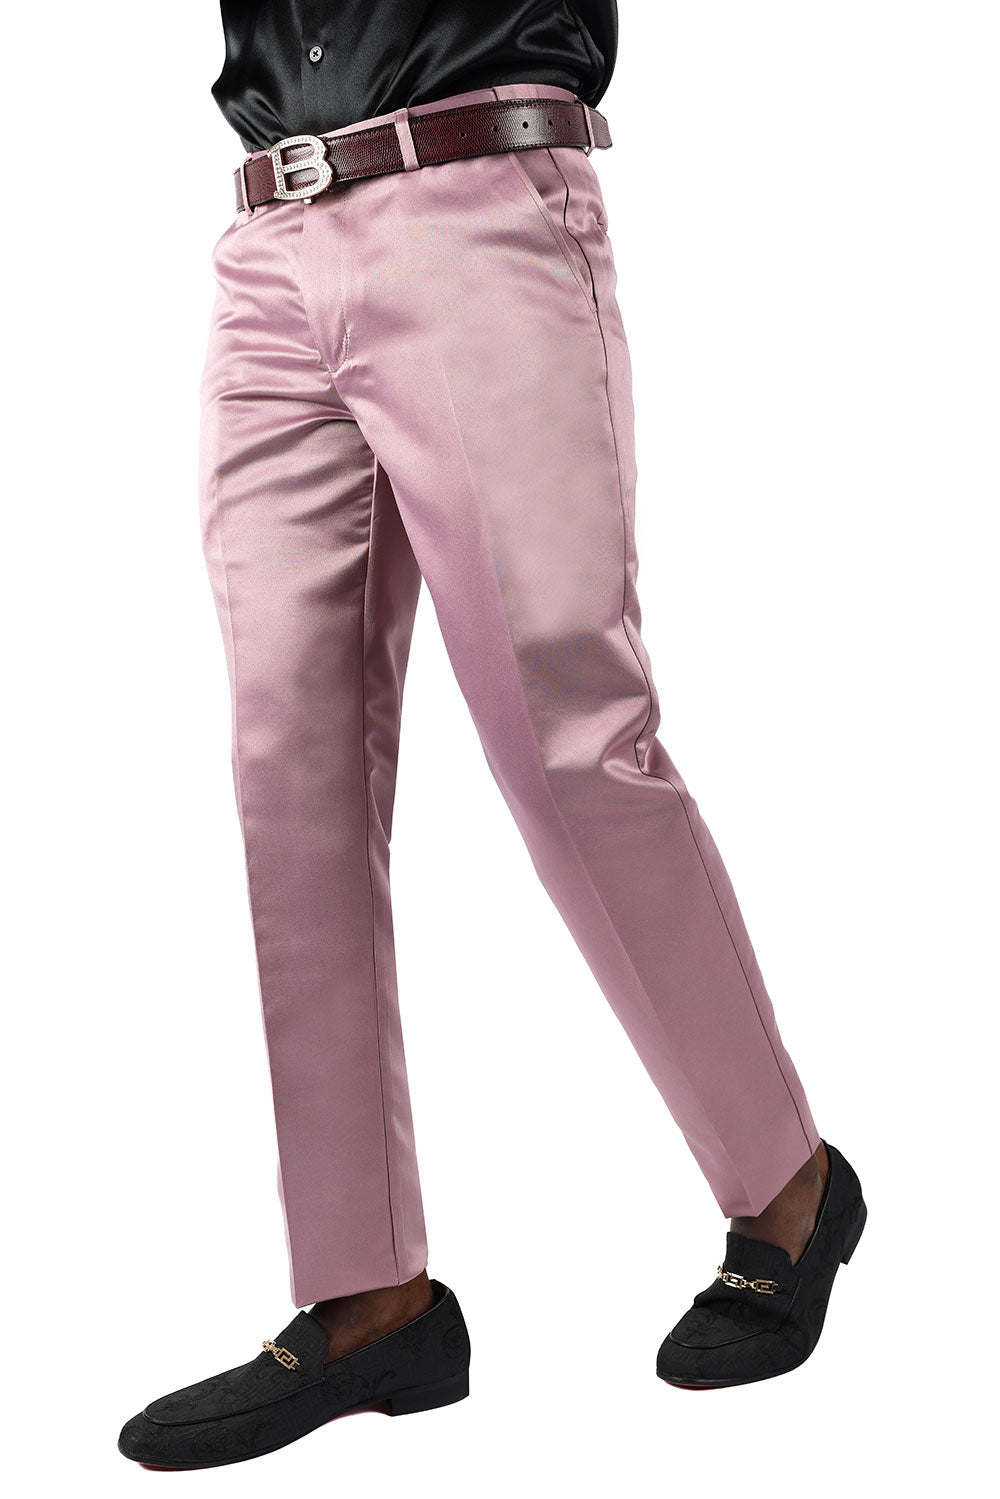 BARABAS Men's Solid Color Plain Shiny Chino Dress Pants 3CP02 Purple